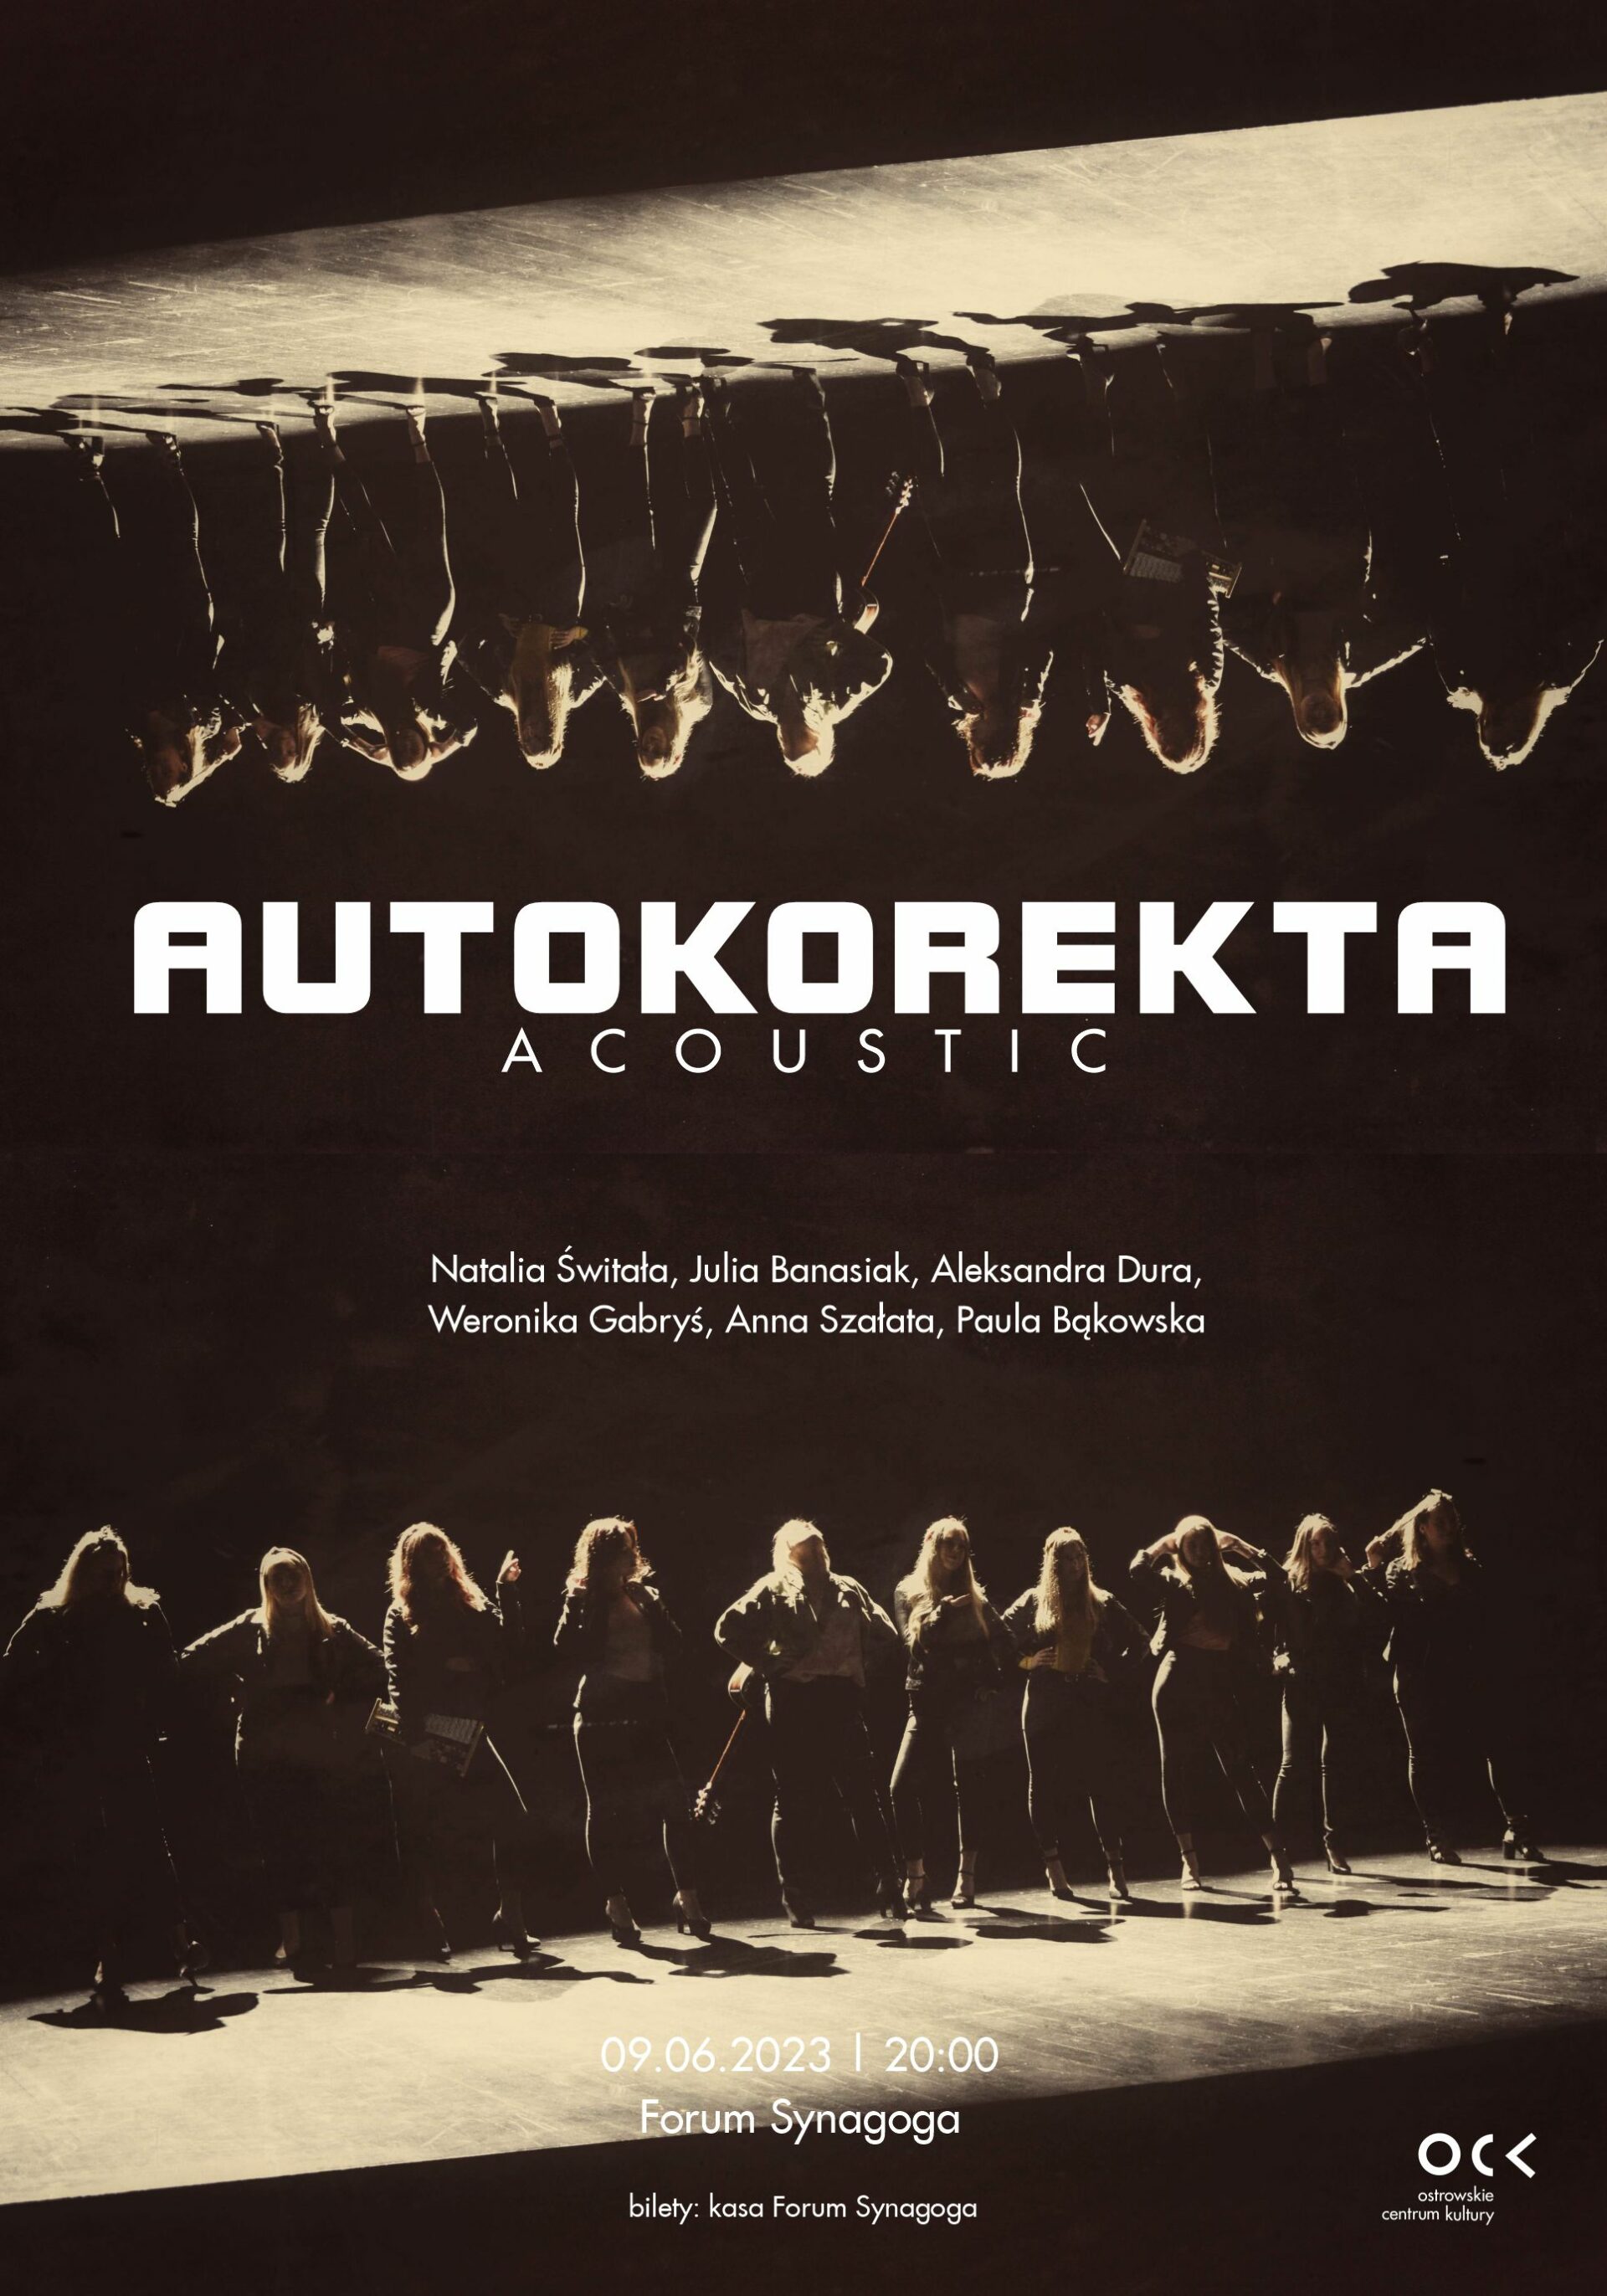 Autokorekta Acoustic